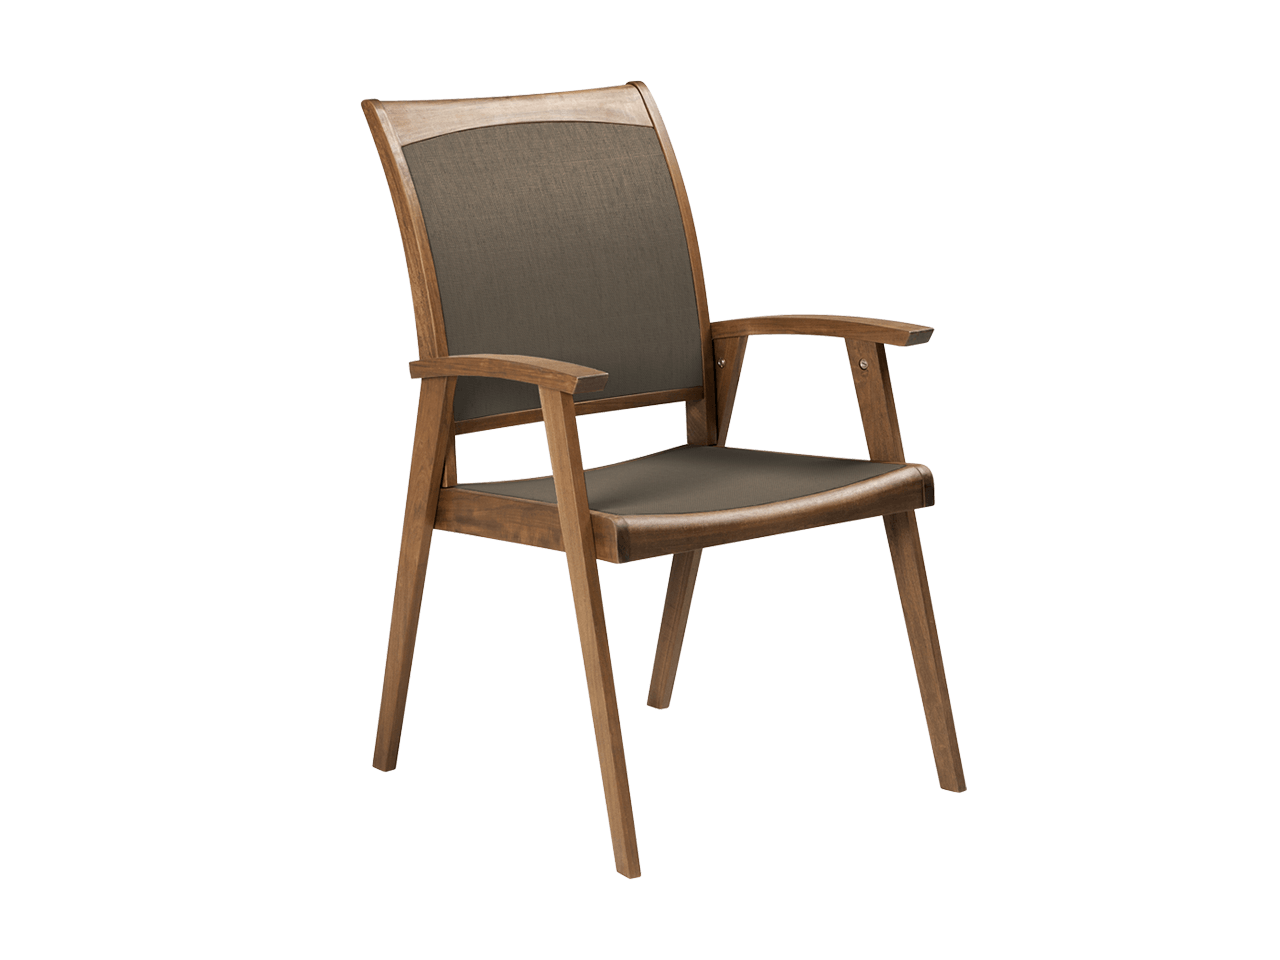 Topaz Sling Arm Chair